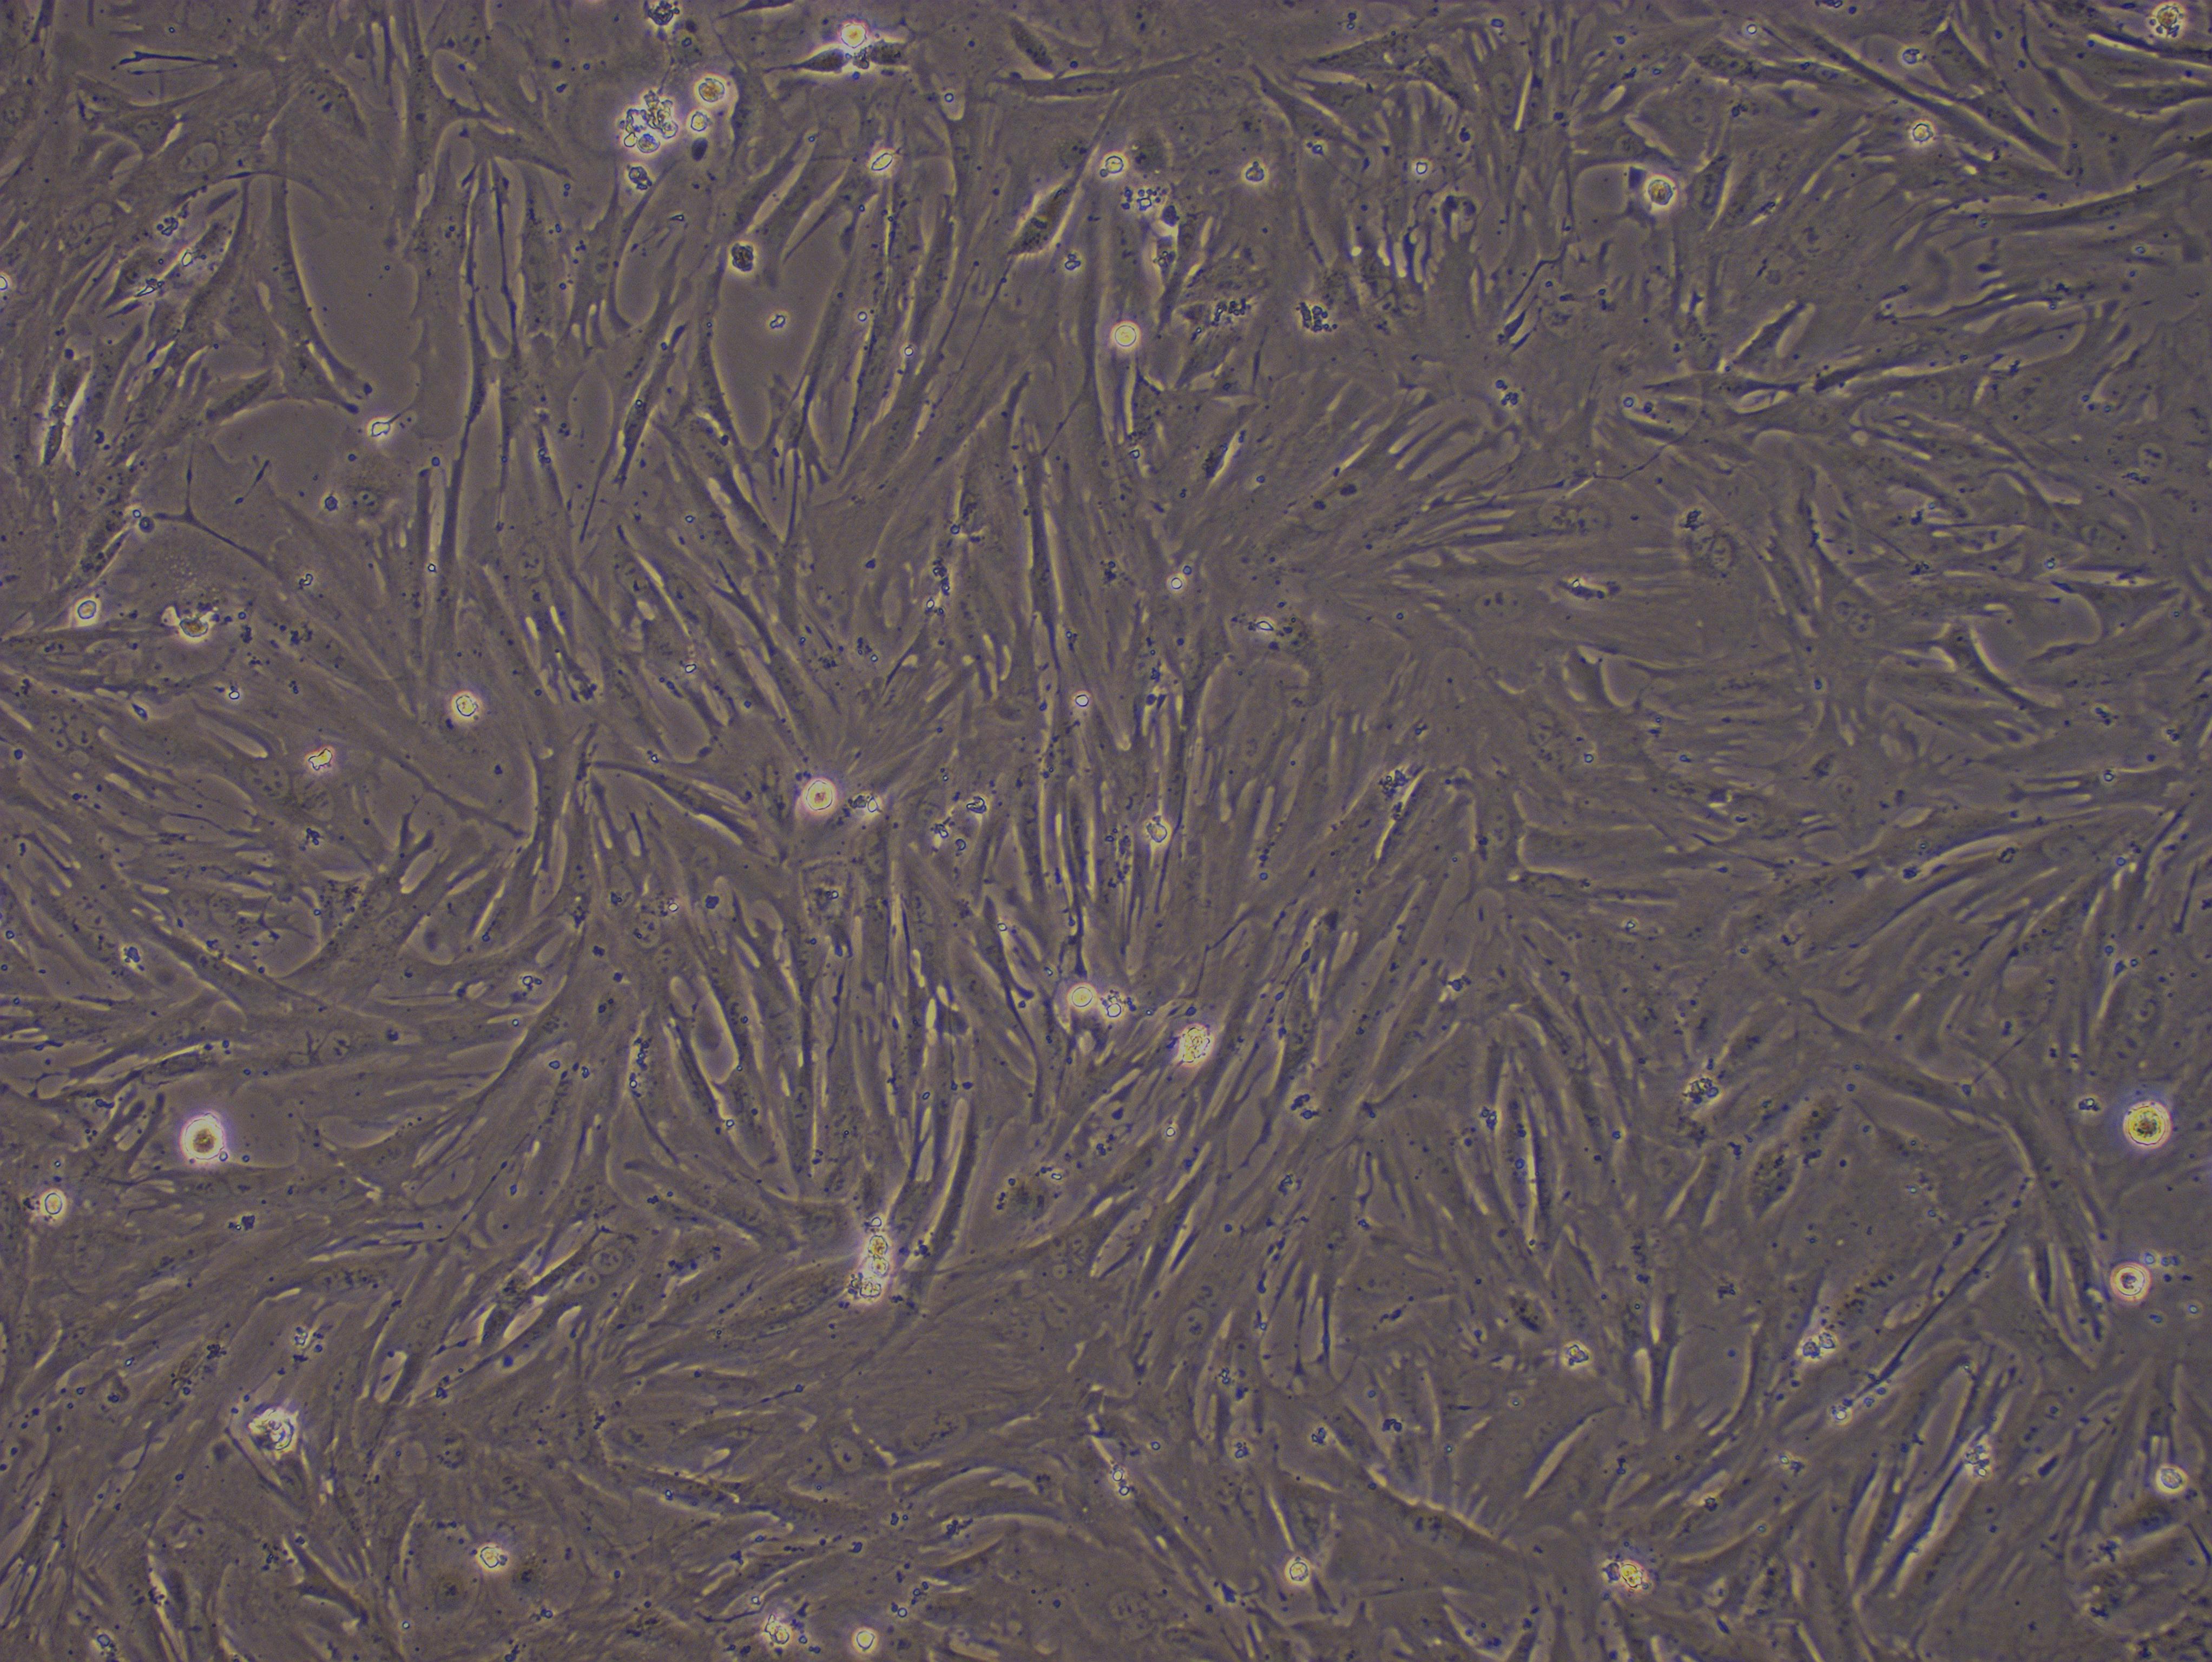 Primary Rabbit Sertoli Cells (SEC)